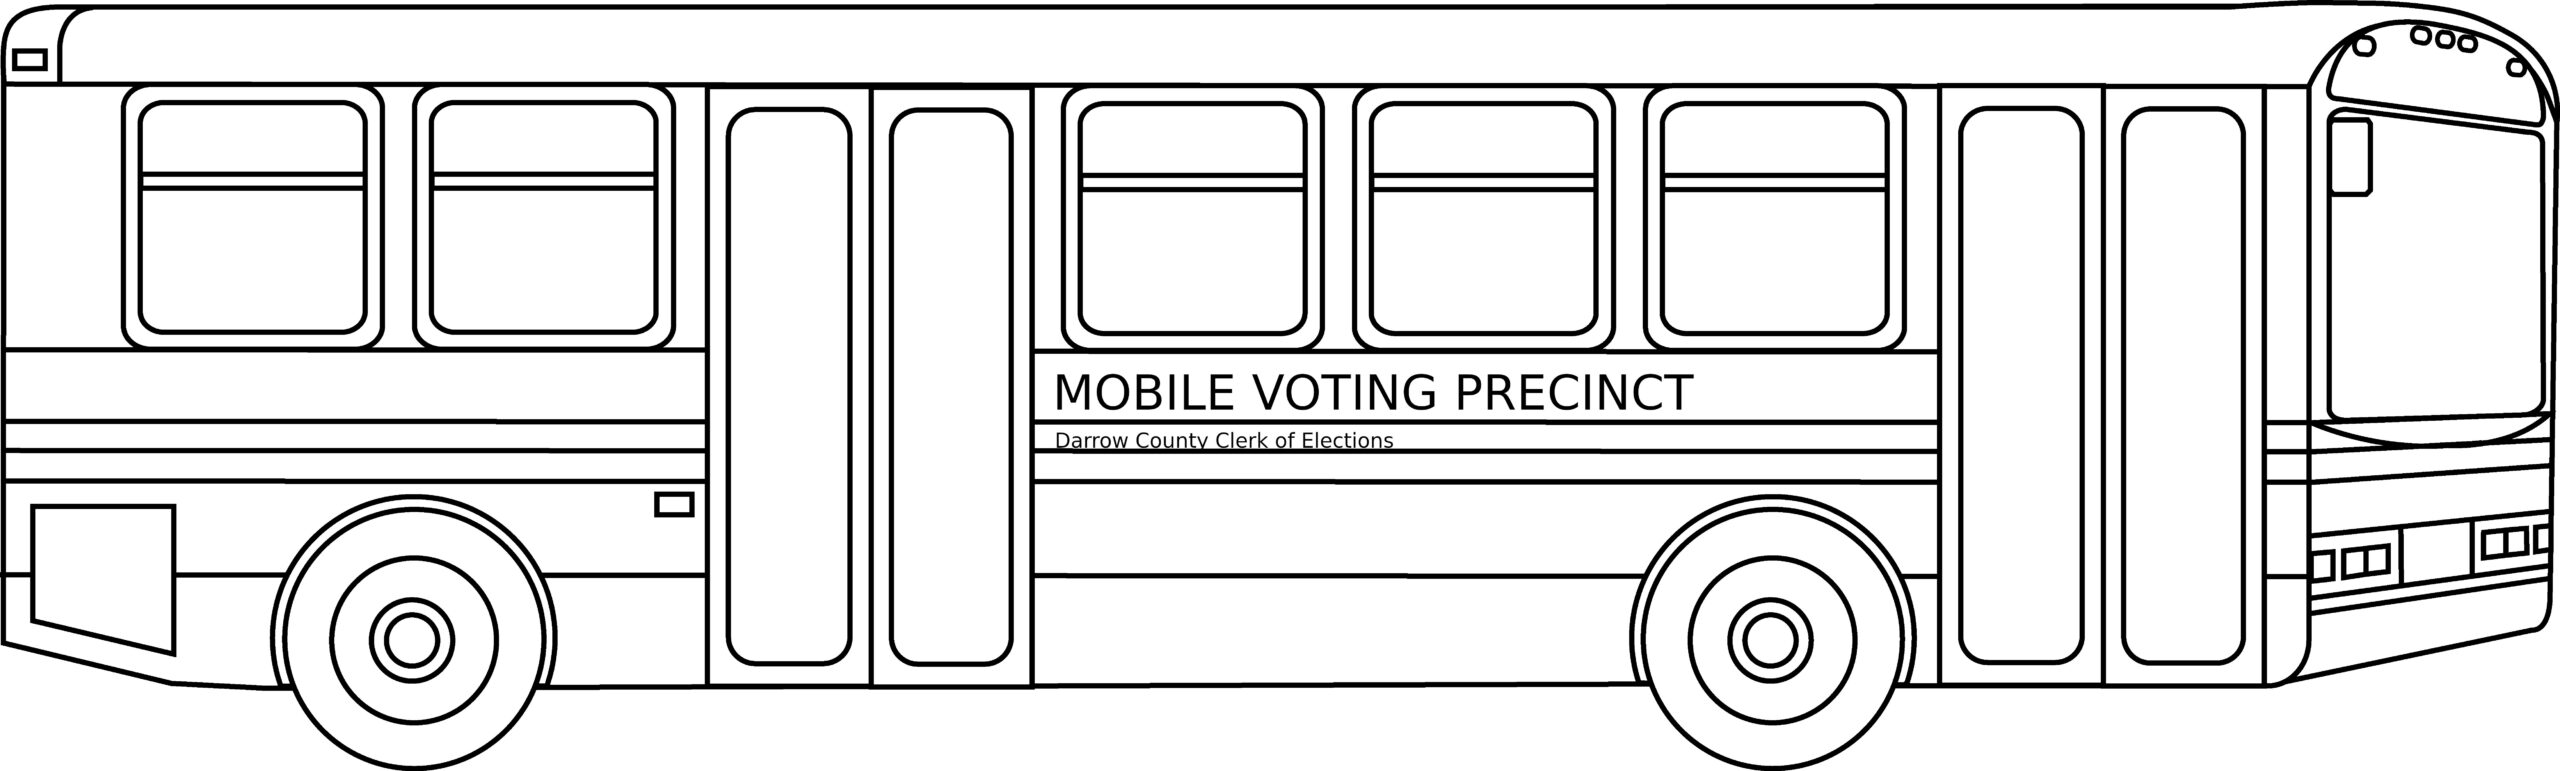 Mobile voting precinct - artist's concept